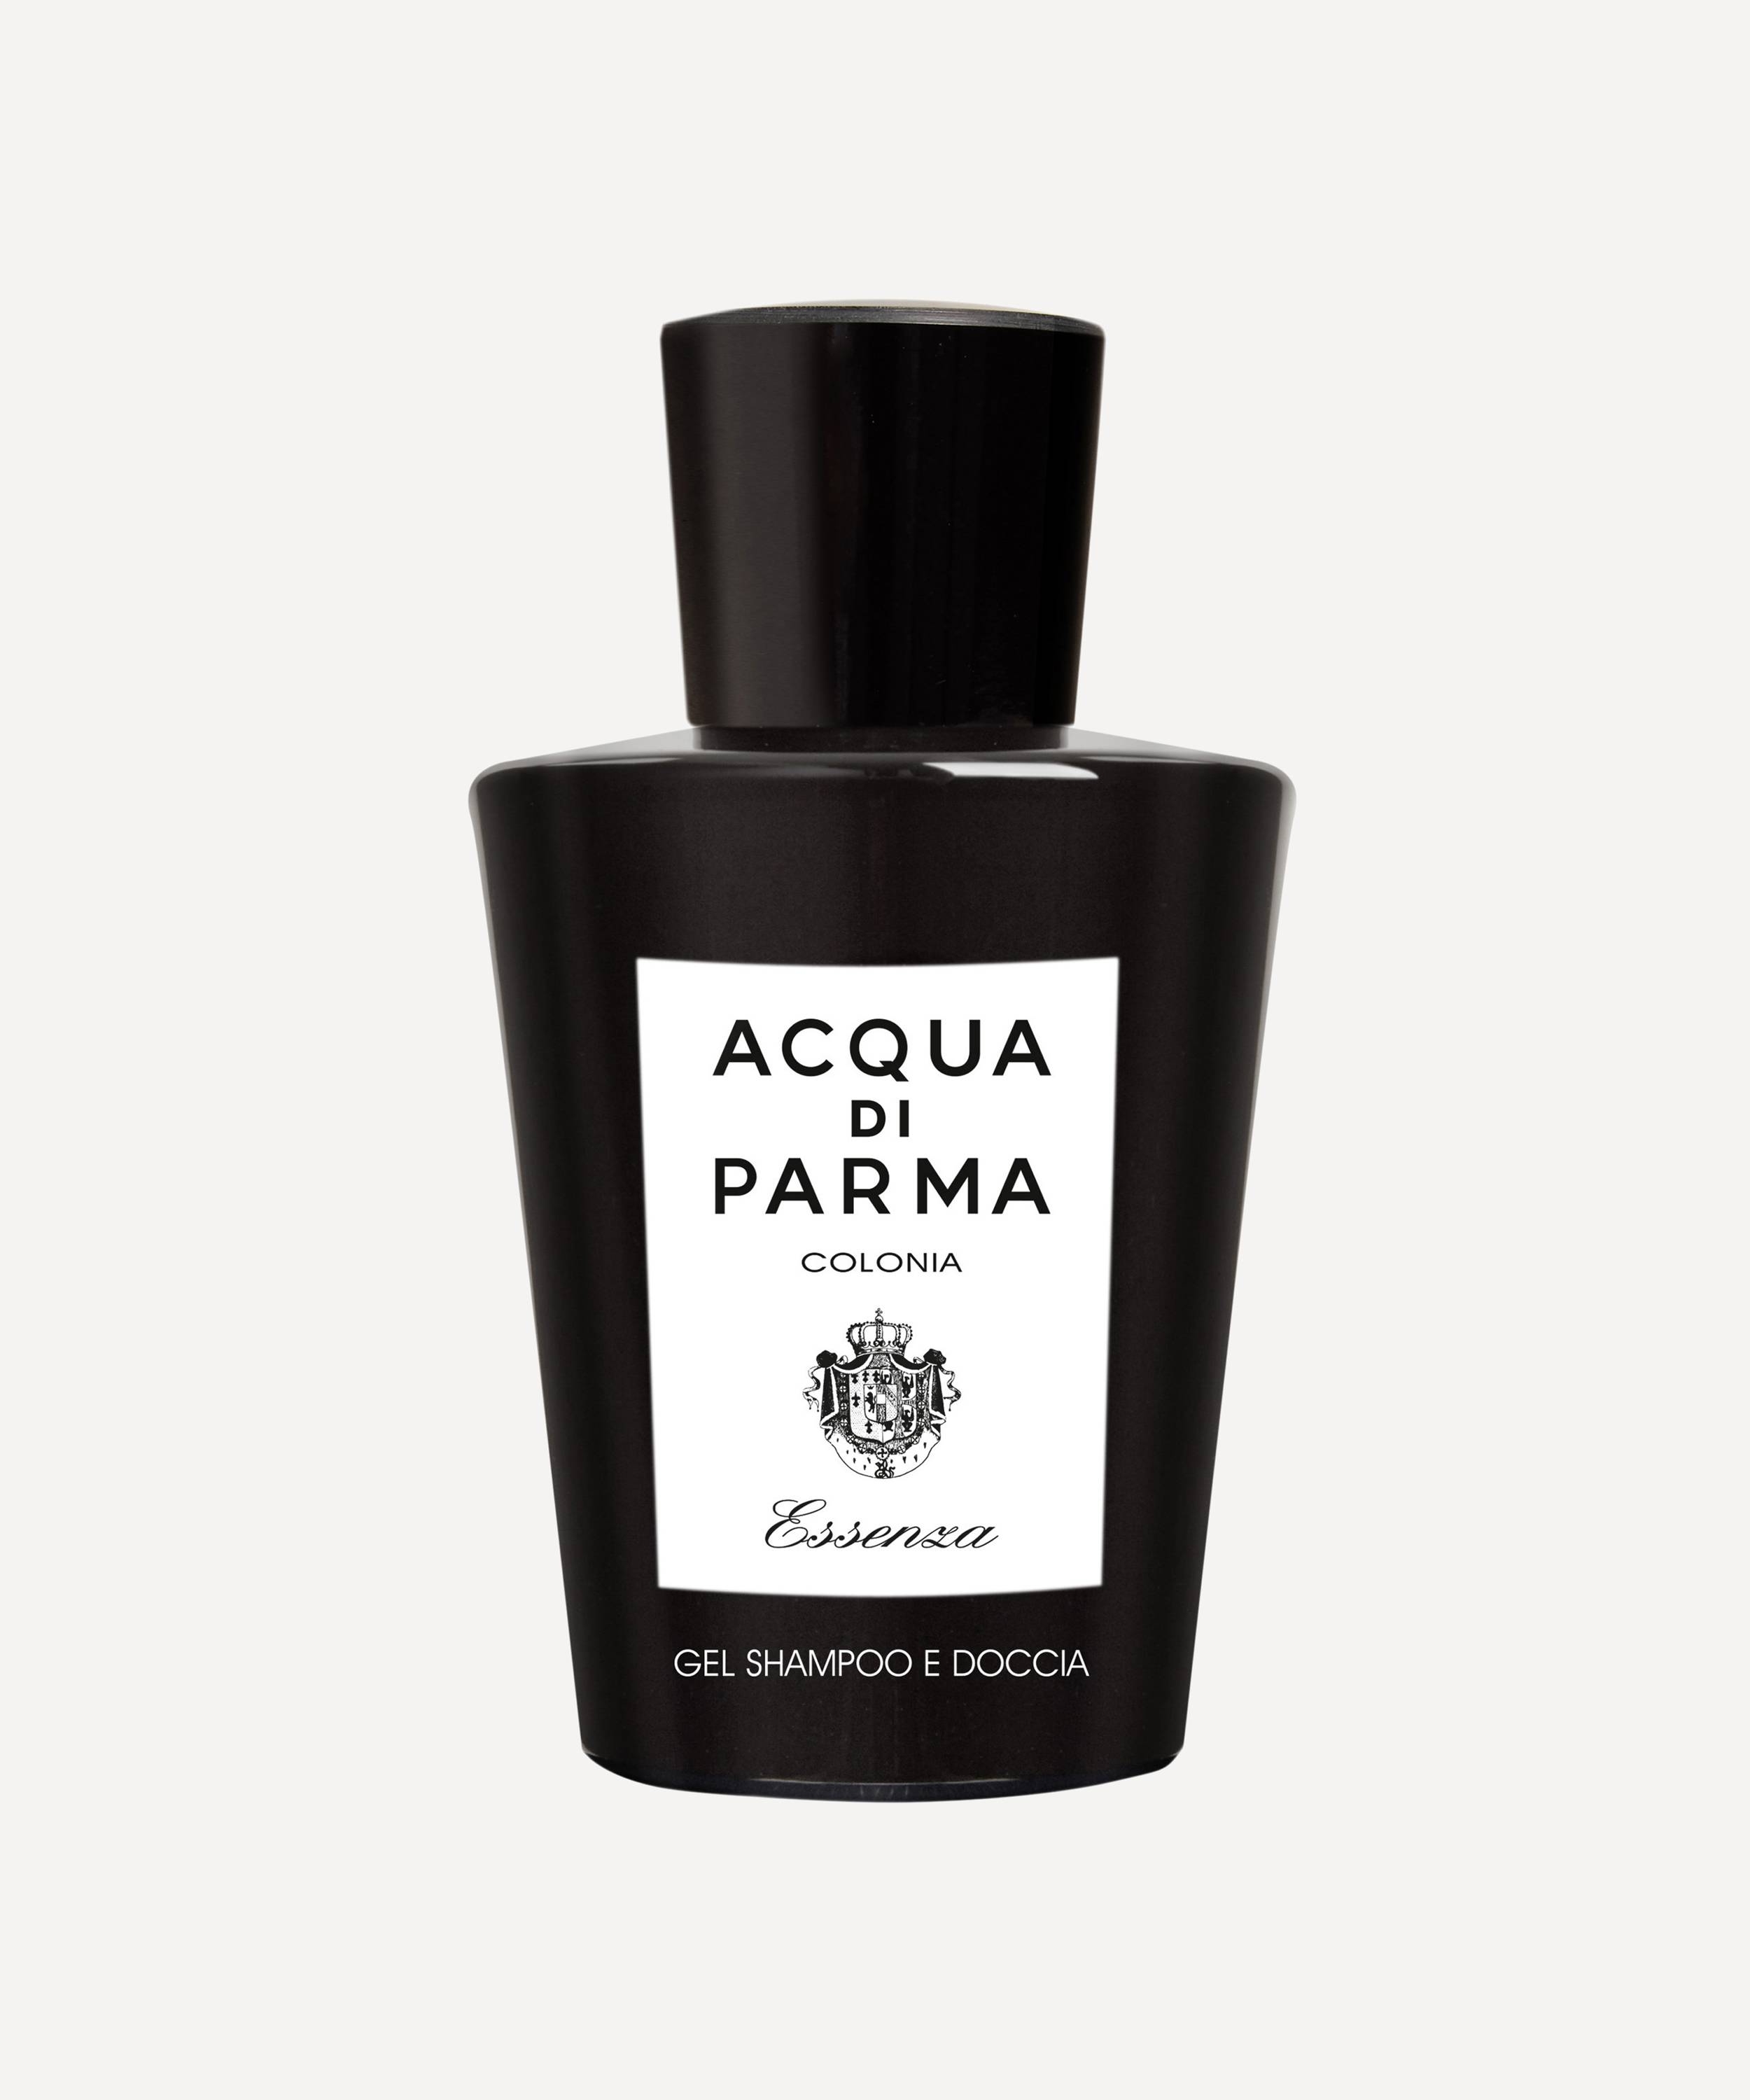 Minachting Rijke man Begrip Acqua Di Parma Colonia Essenza Hair and Body Cleanser 200ml | Liberty